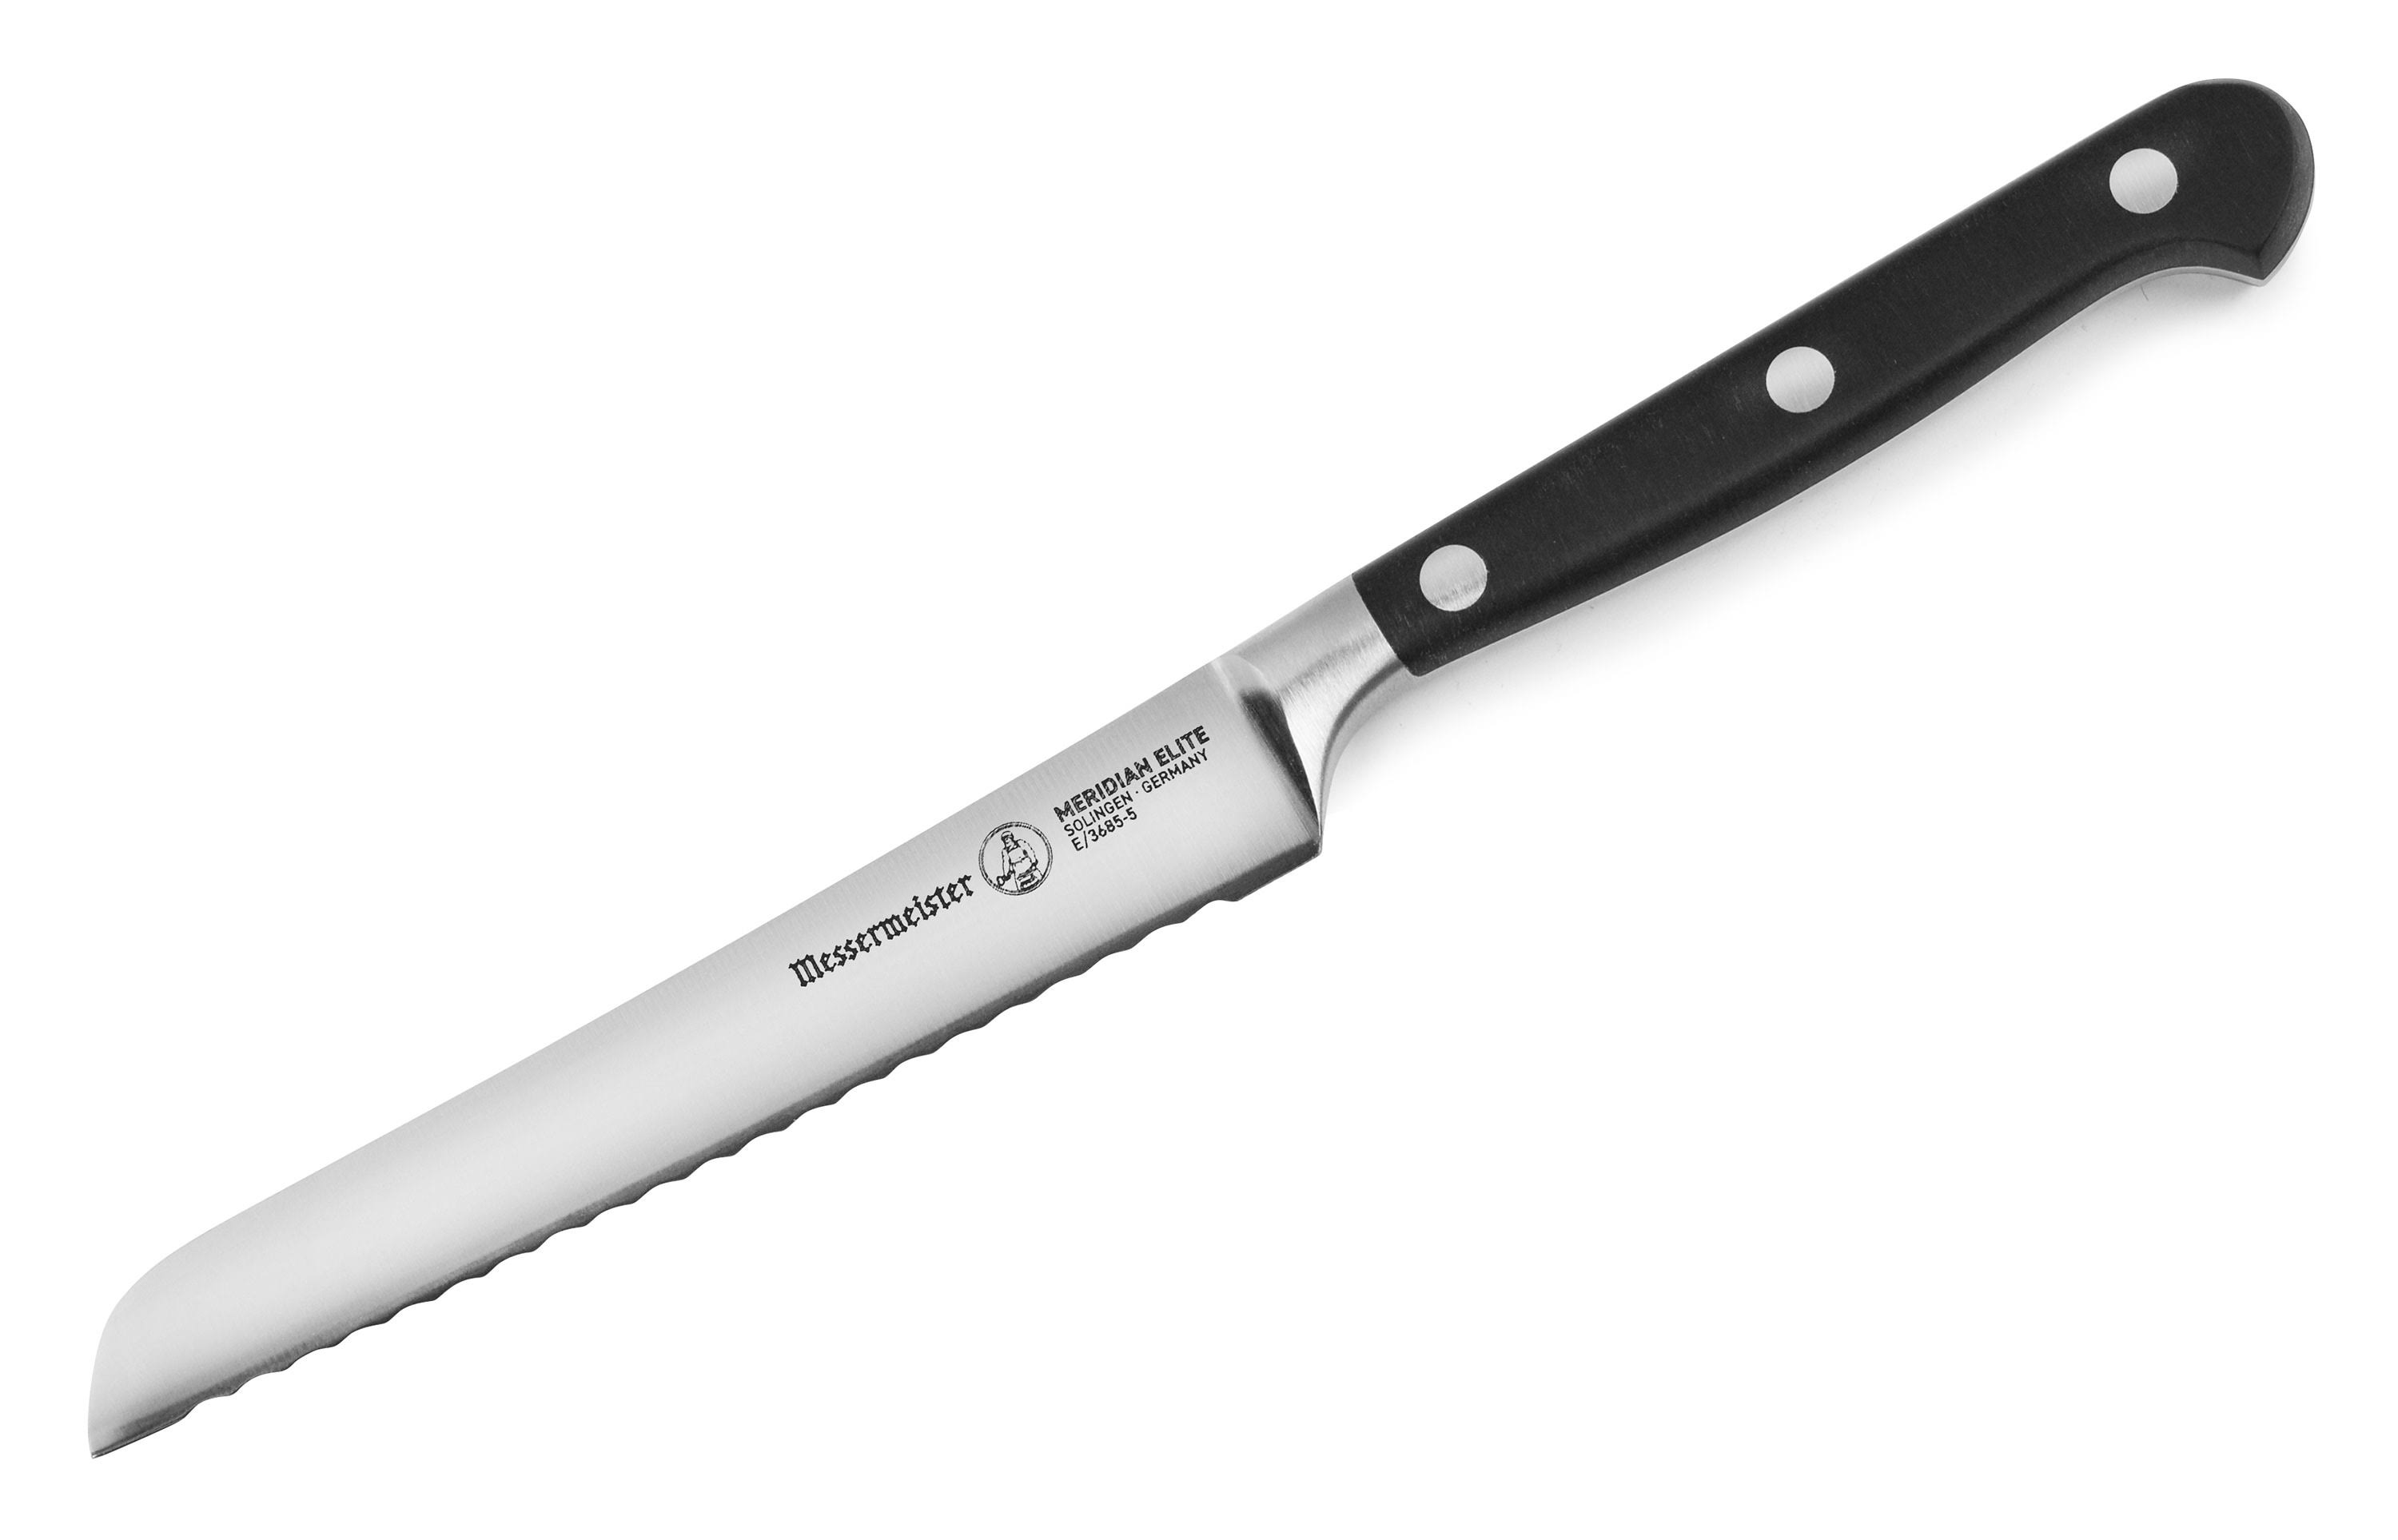 Messermeister Meridian Elite - 12.7cm Scalloped Utility Knife E/3685-5 | Kitchen Utensils & Gadgets